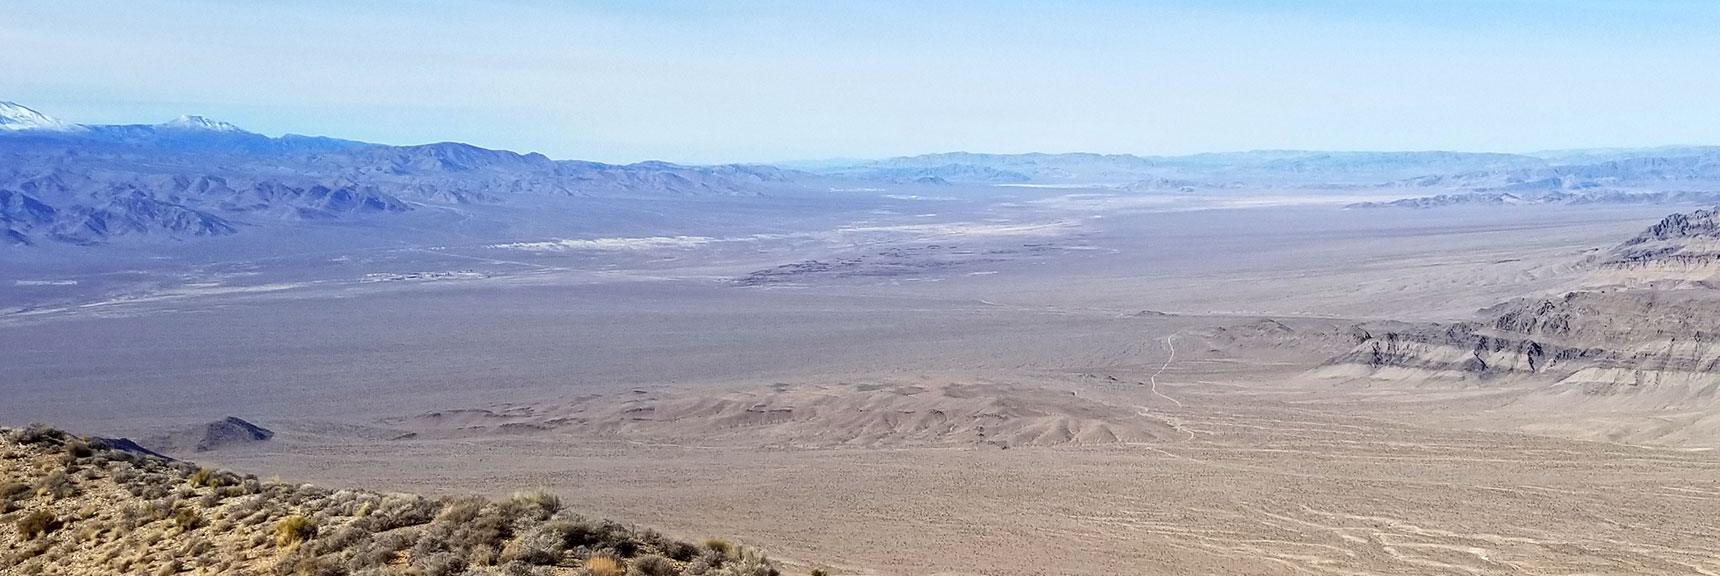 View Toward Death Valley from Gass Peak Summit, Nevada